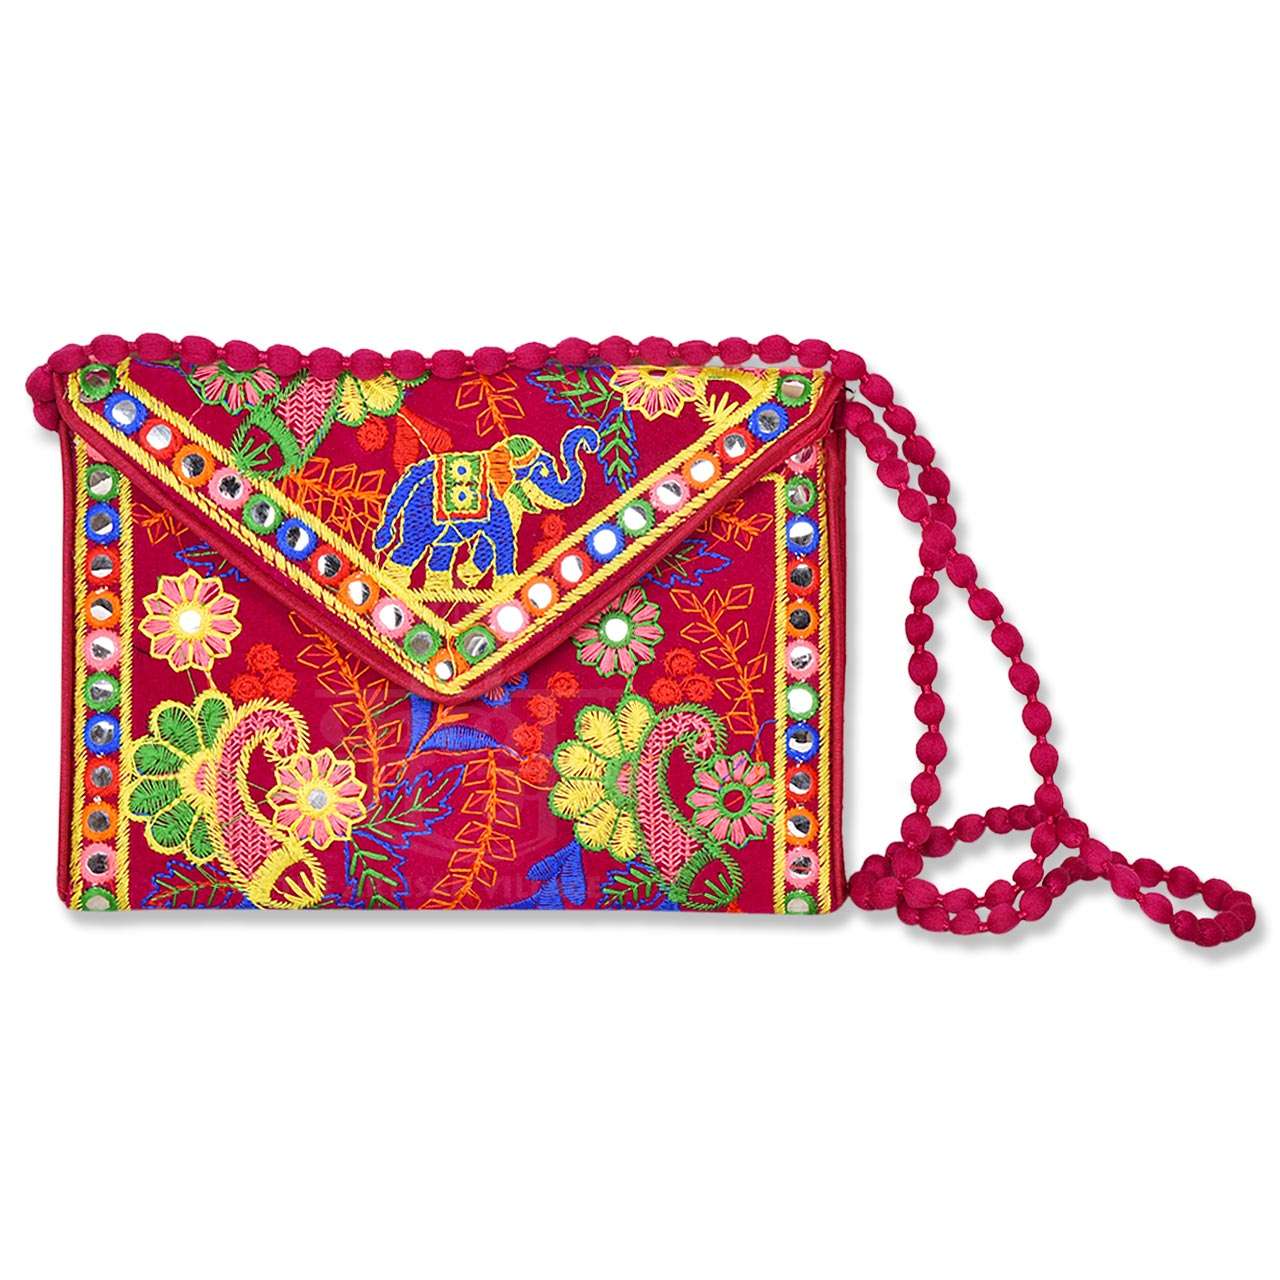 Handled Rajasthani Handbags at Rs 300/bag in Ludhiana | ID: 20904779930